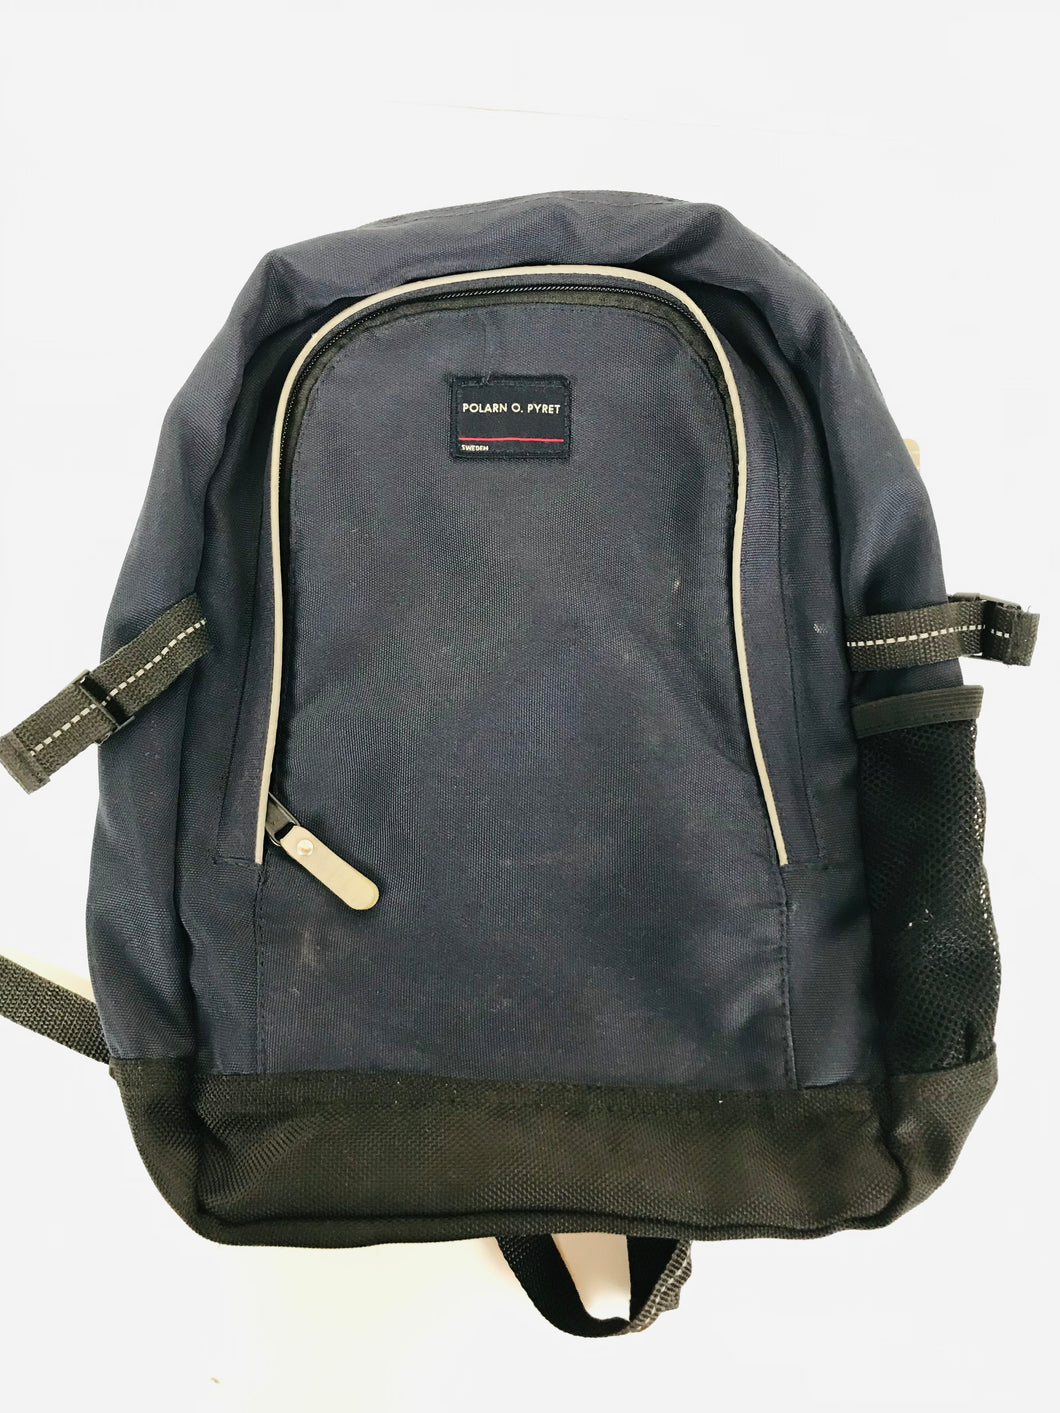 Polarn O. Pyret Kid's Backpack Bag | 13x15 | Black